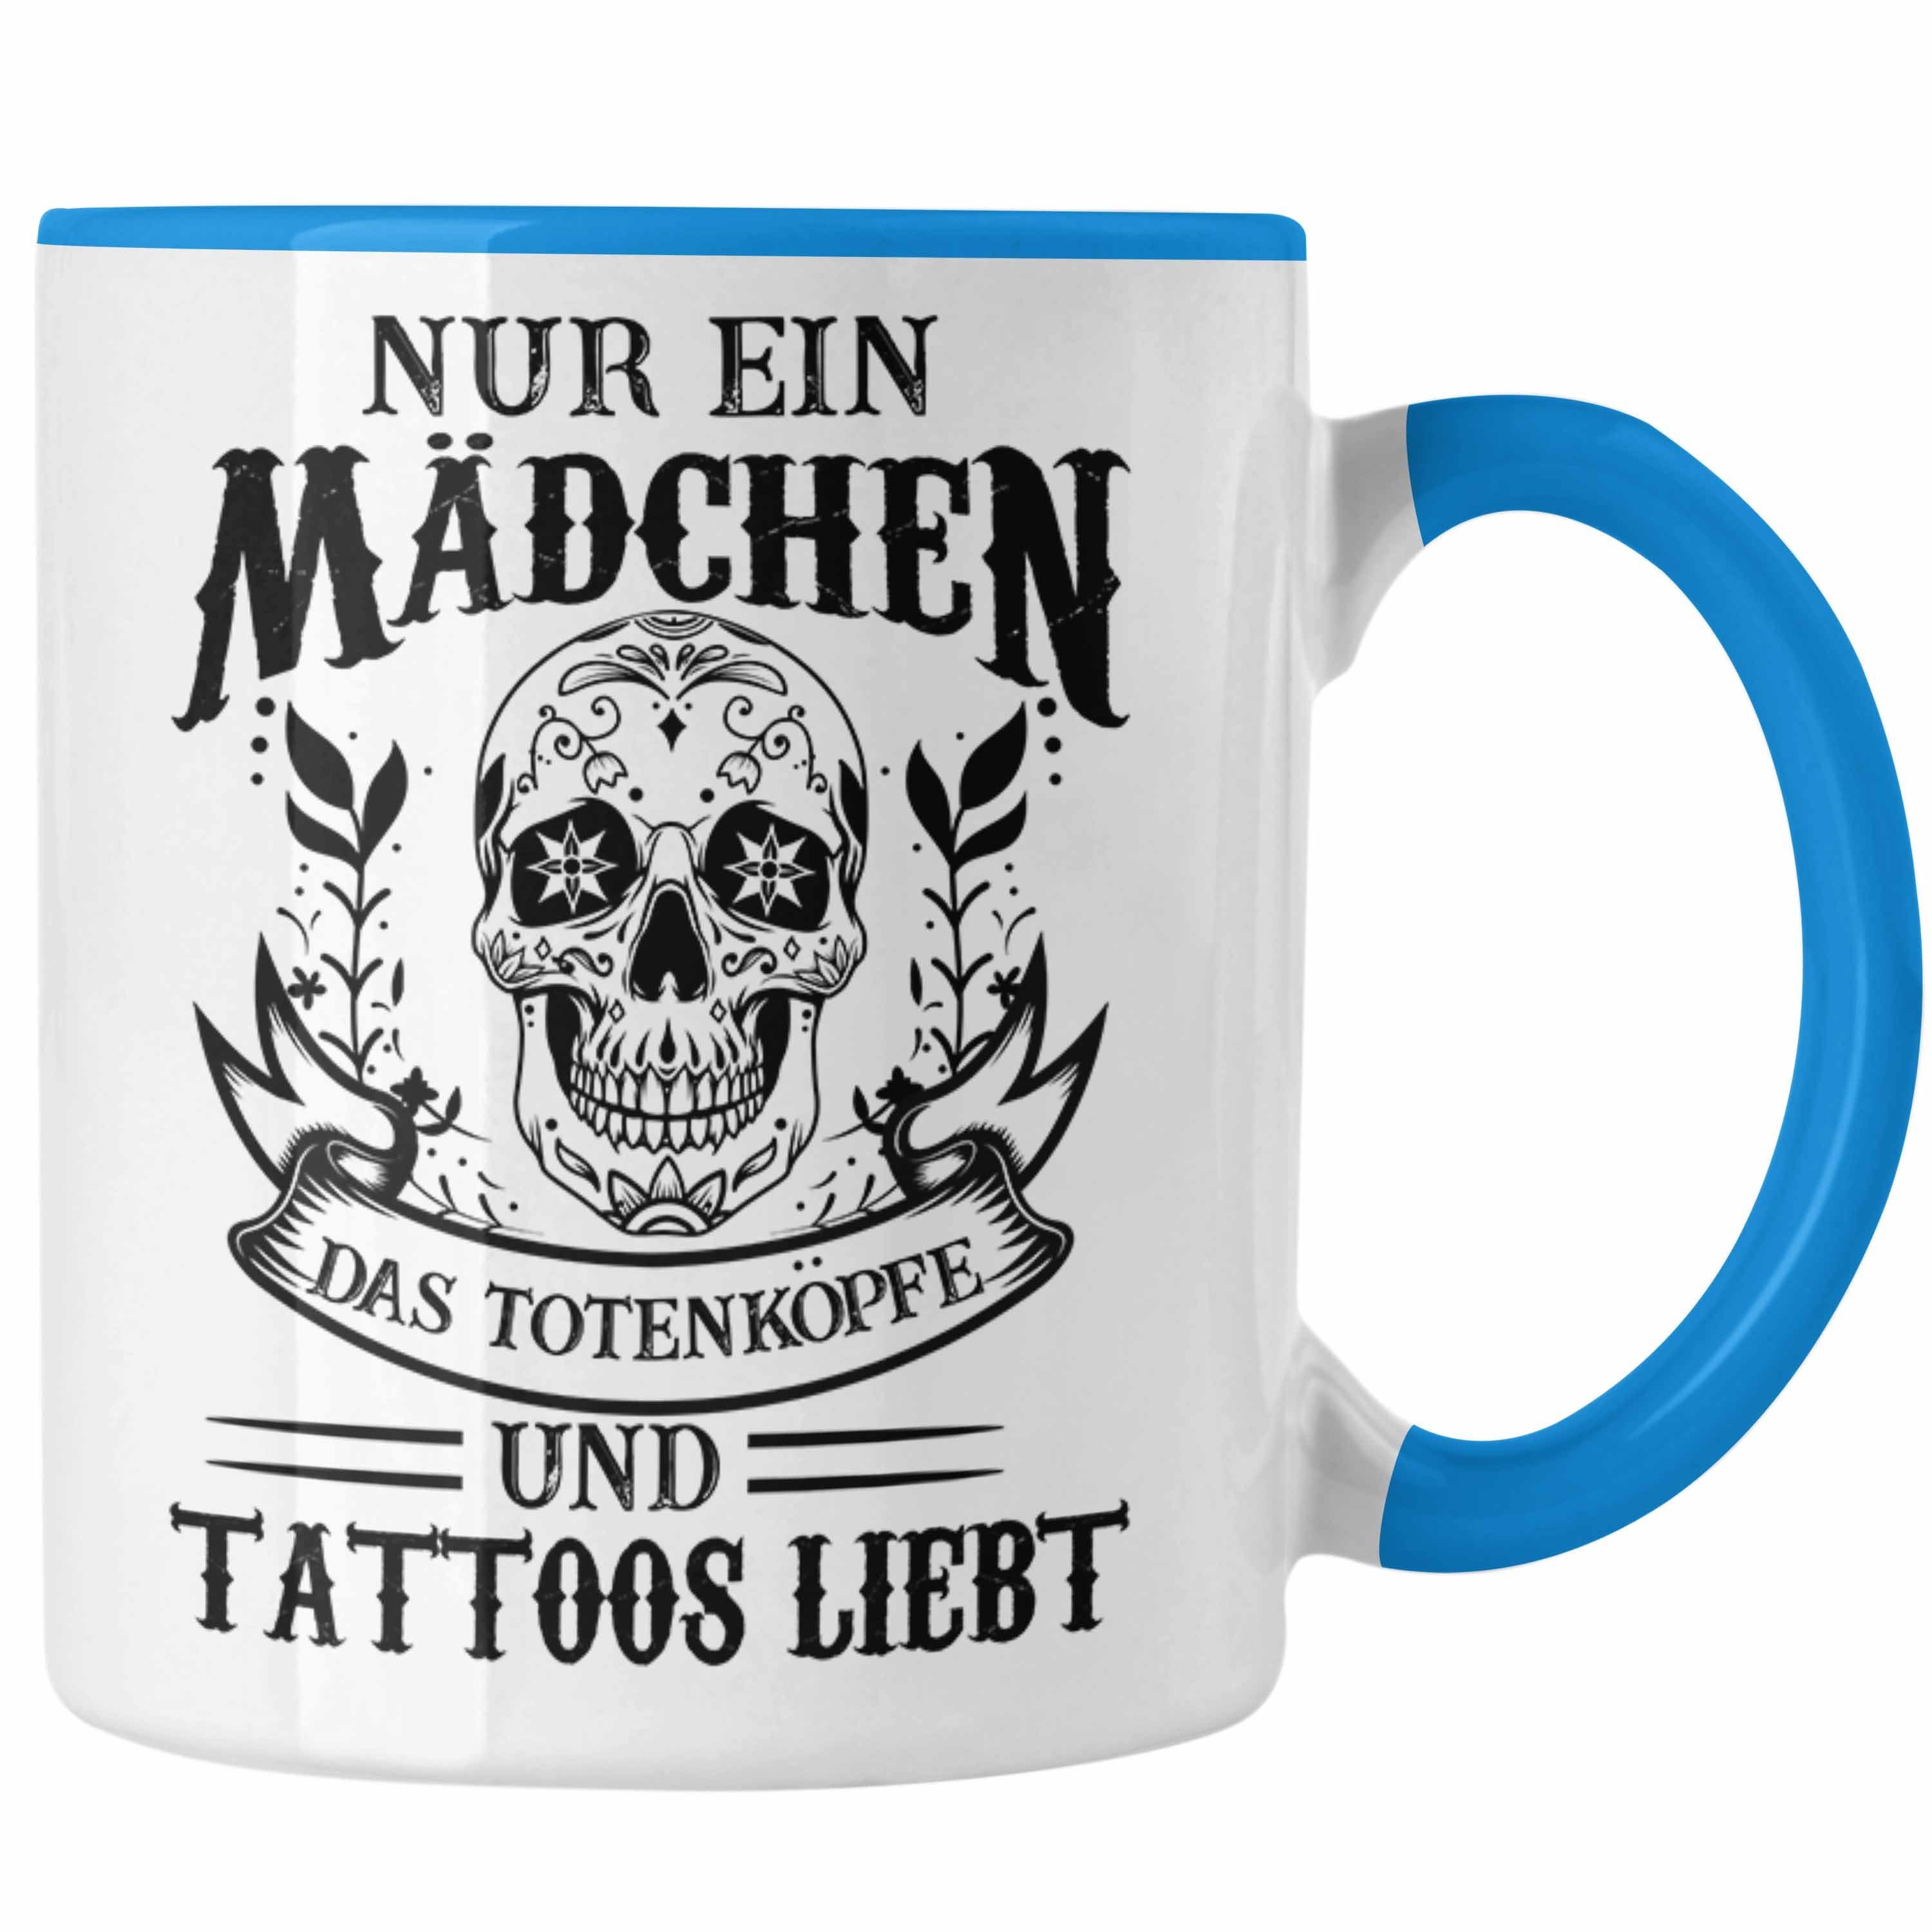 Trendation Tasse Trendation - Tattoos Frauen Tasse Tätowiererin Geschenk Kaffeetasse Tattoo Totenkopf Tassen Blau